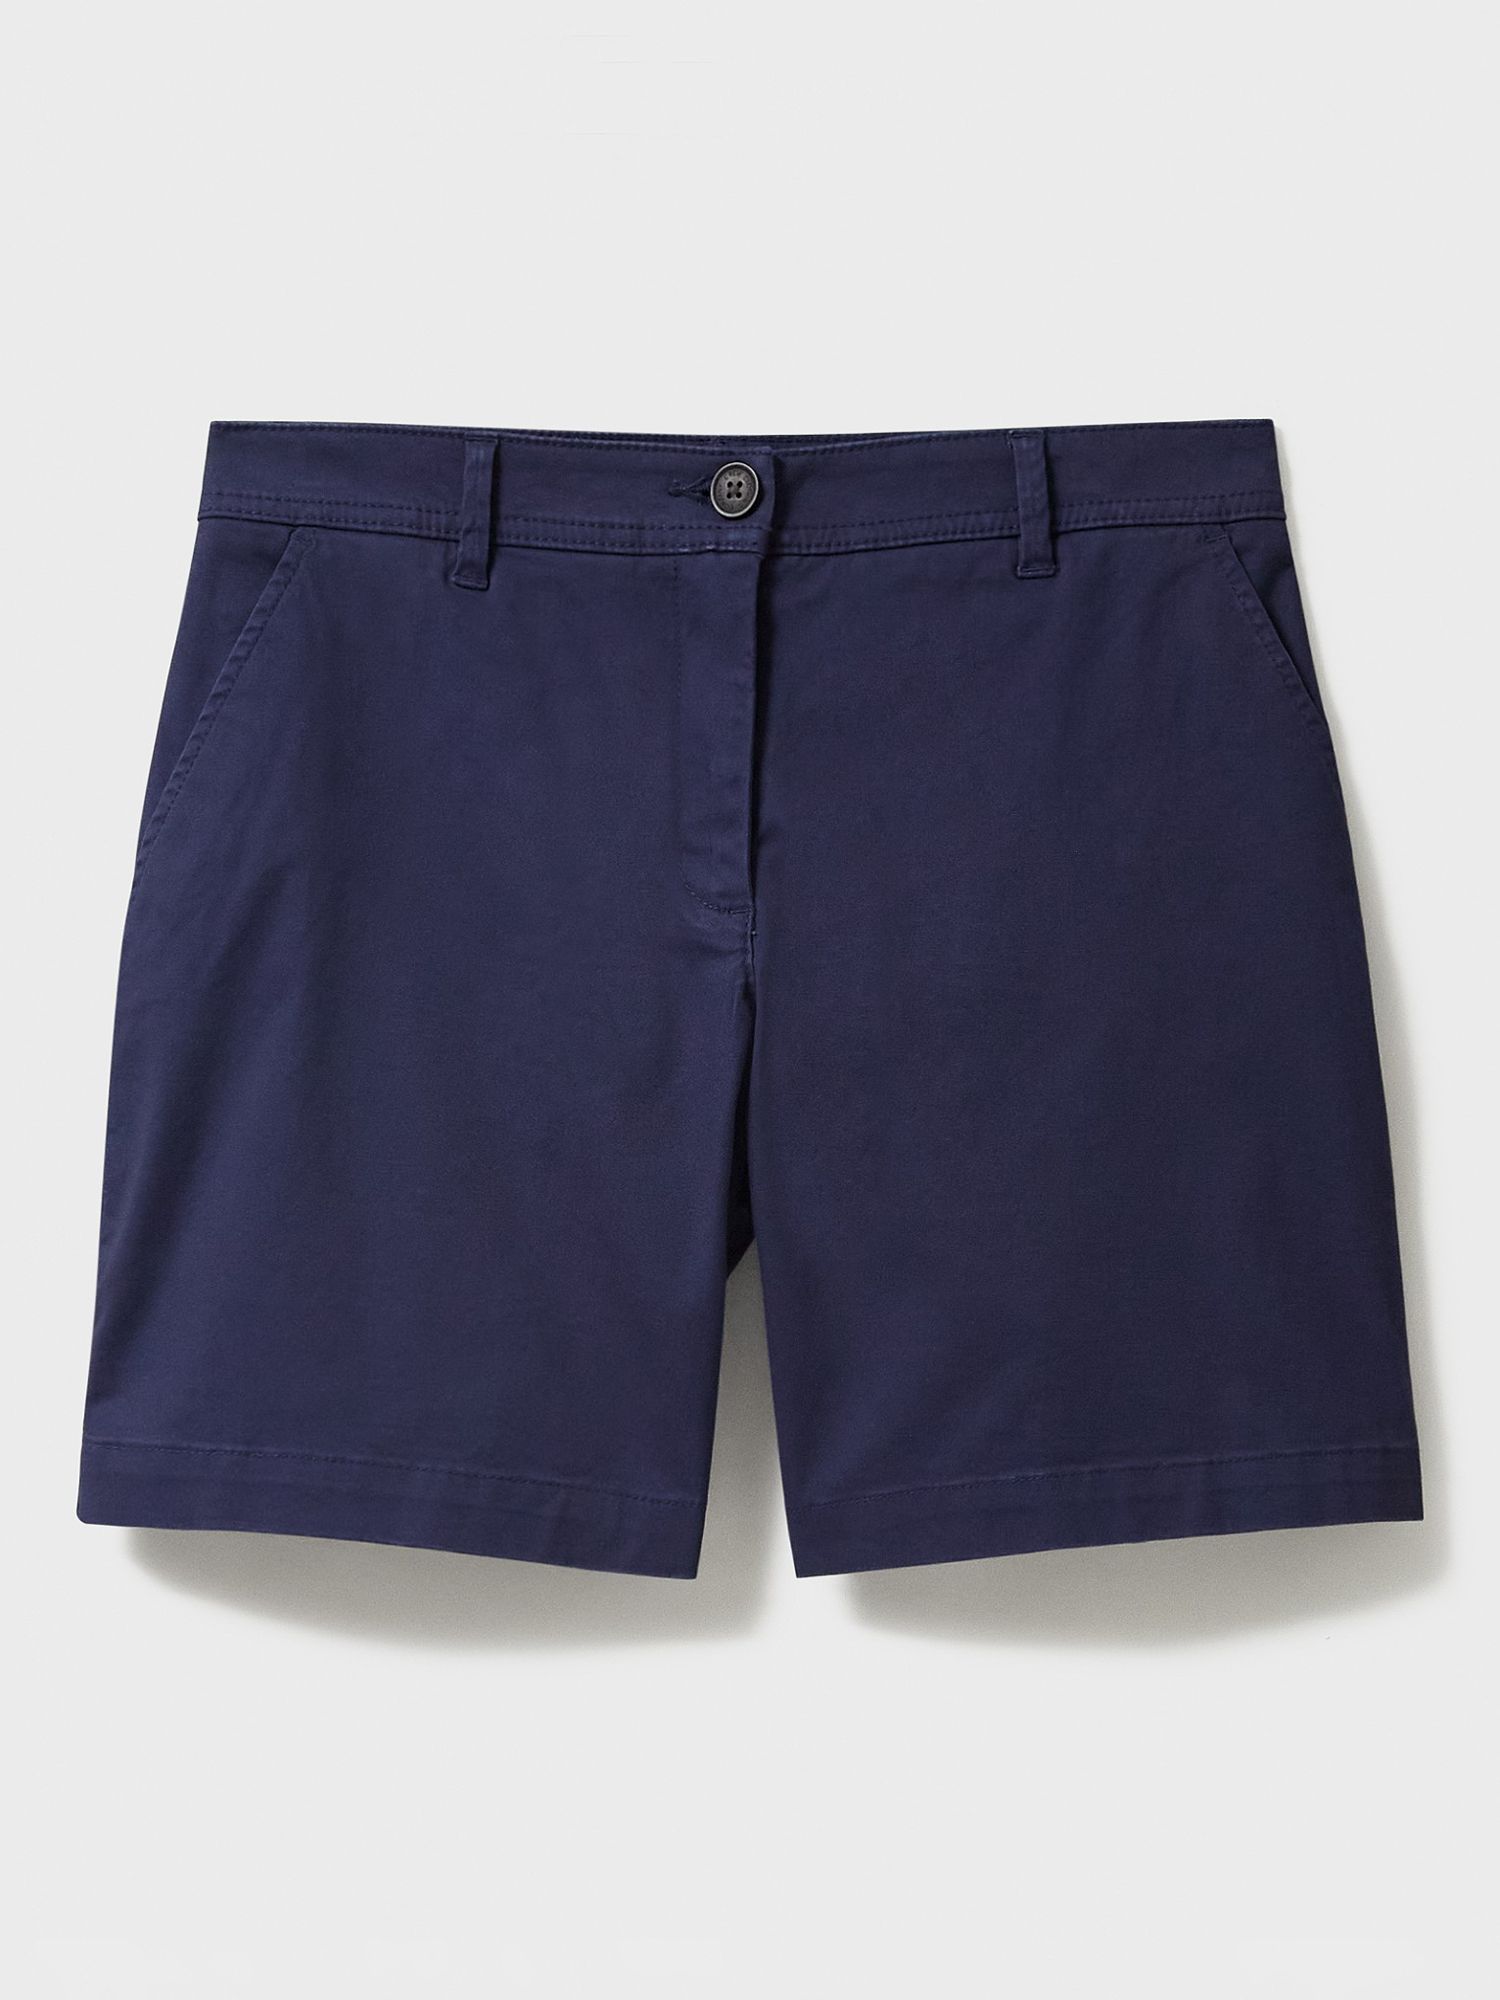 Crew Clothing Chino Shorts, Navy Blue, 6